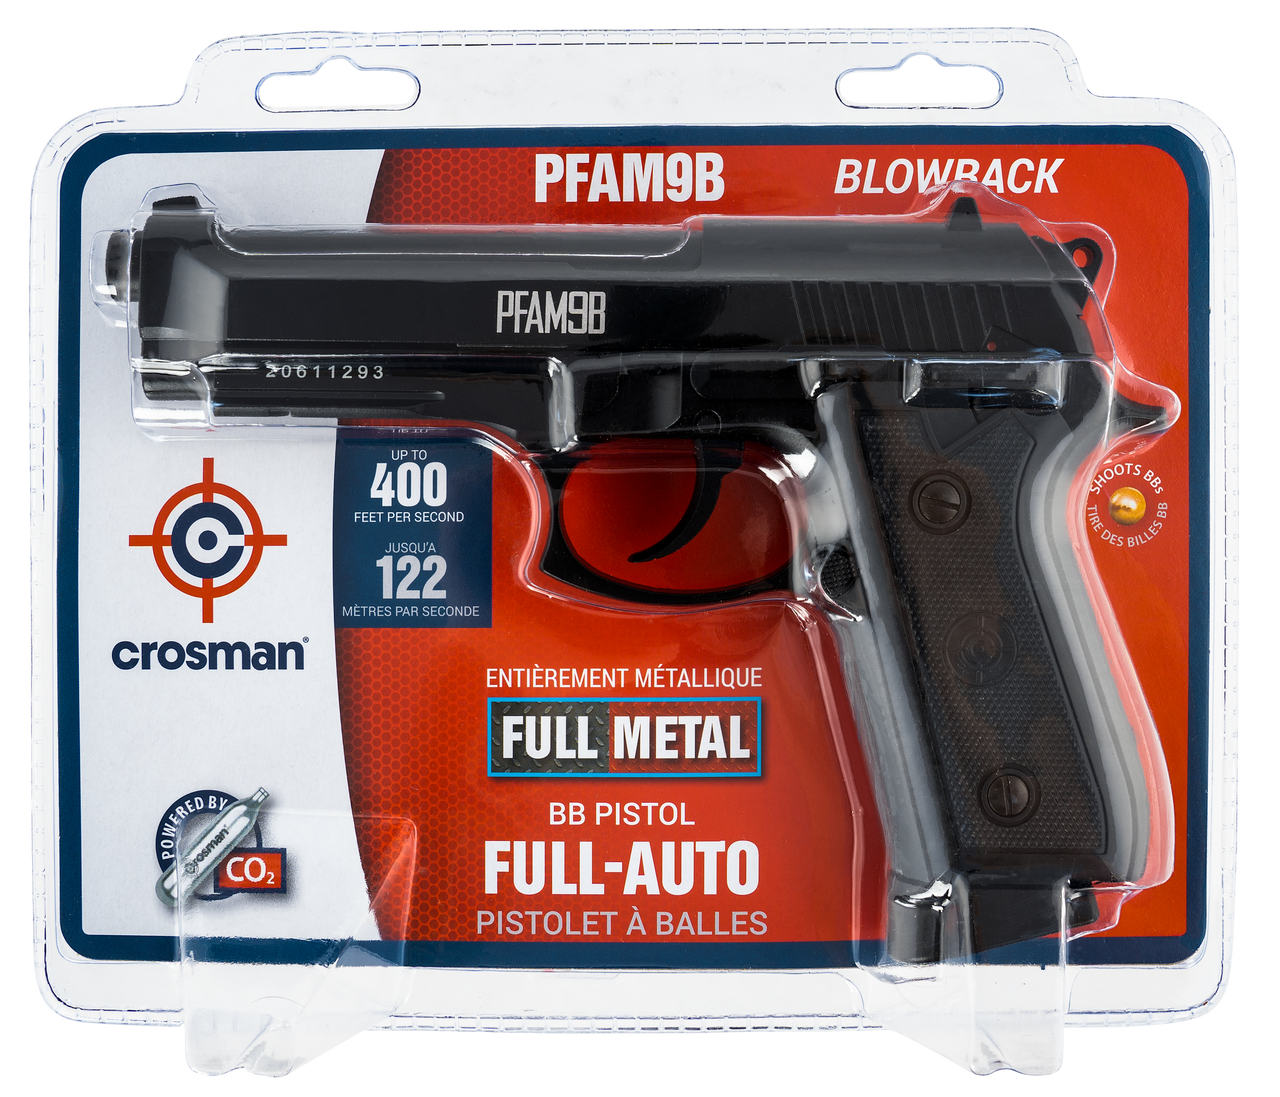 Umarex Glock 17 Gen 3 Blowback CO2 BB Gun Action Pistol – Airgun - KF  Armory, LLC